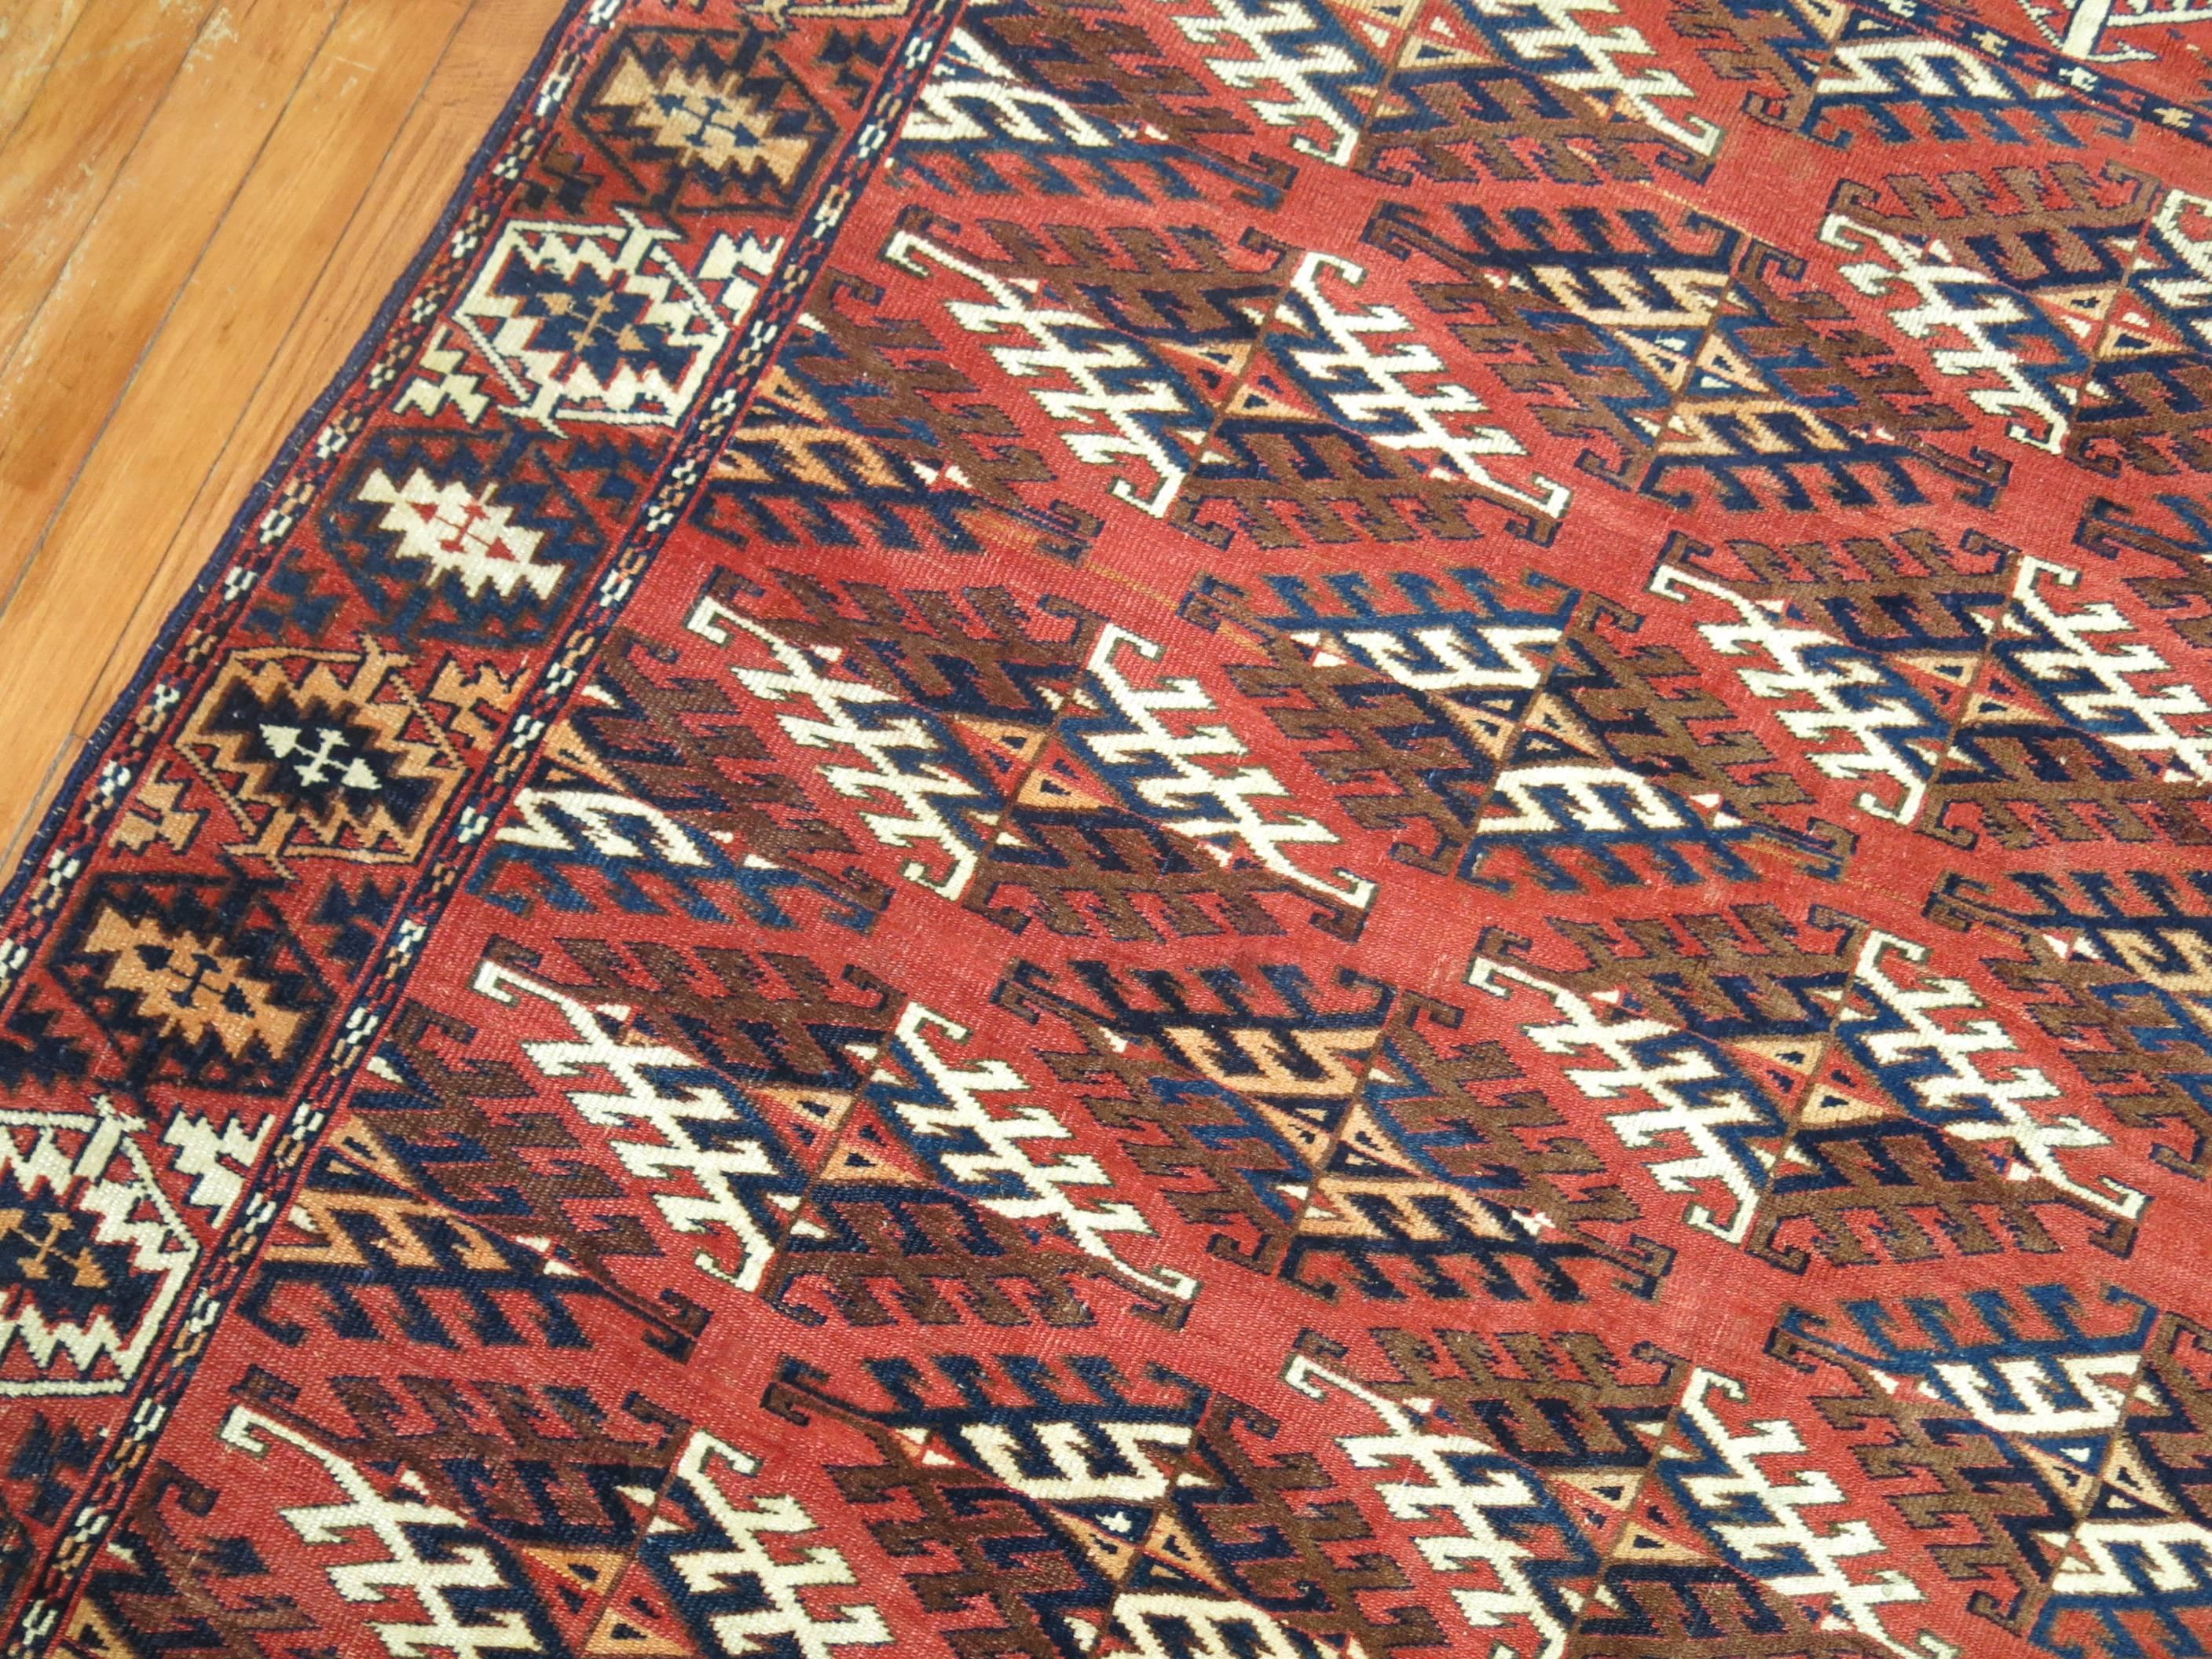 Tribal decorative Turkeman rug in rustic tones

Measures: 5'4